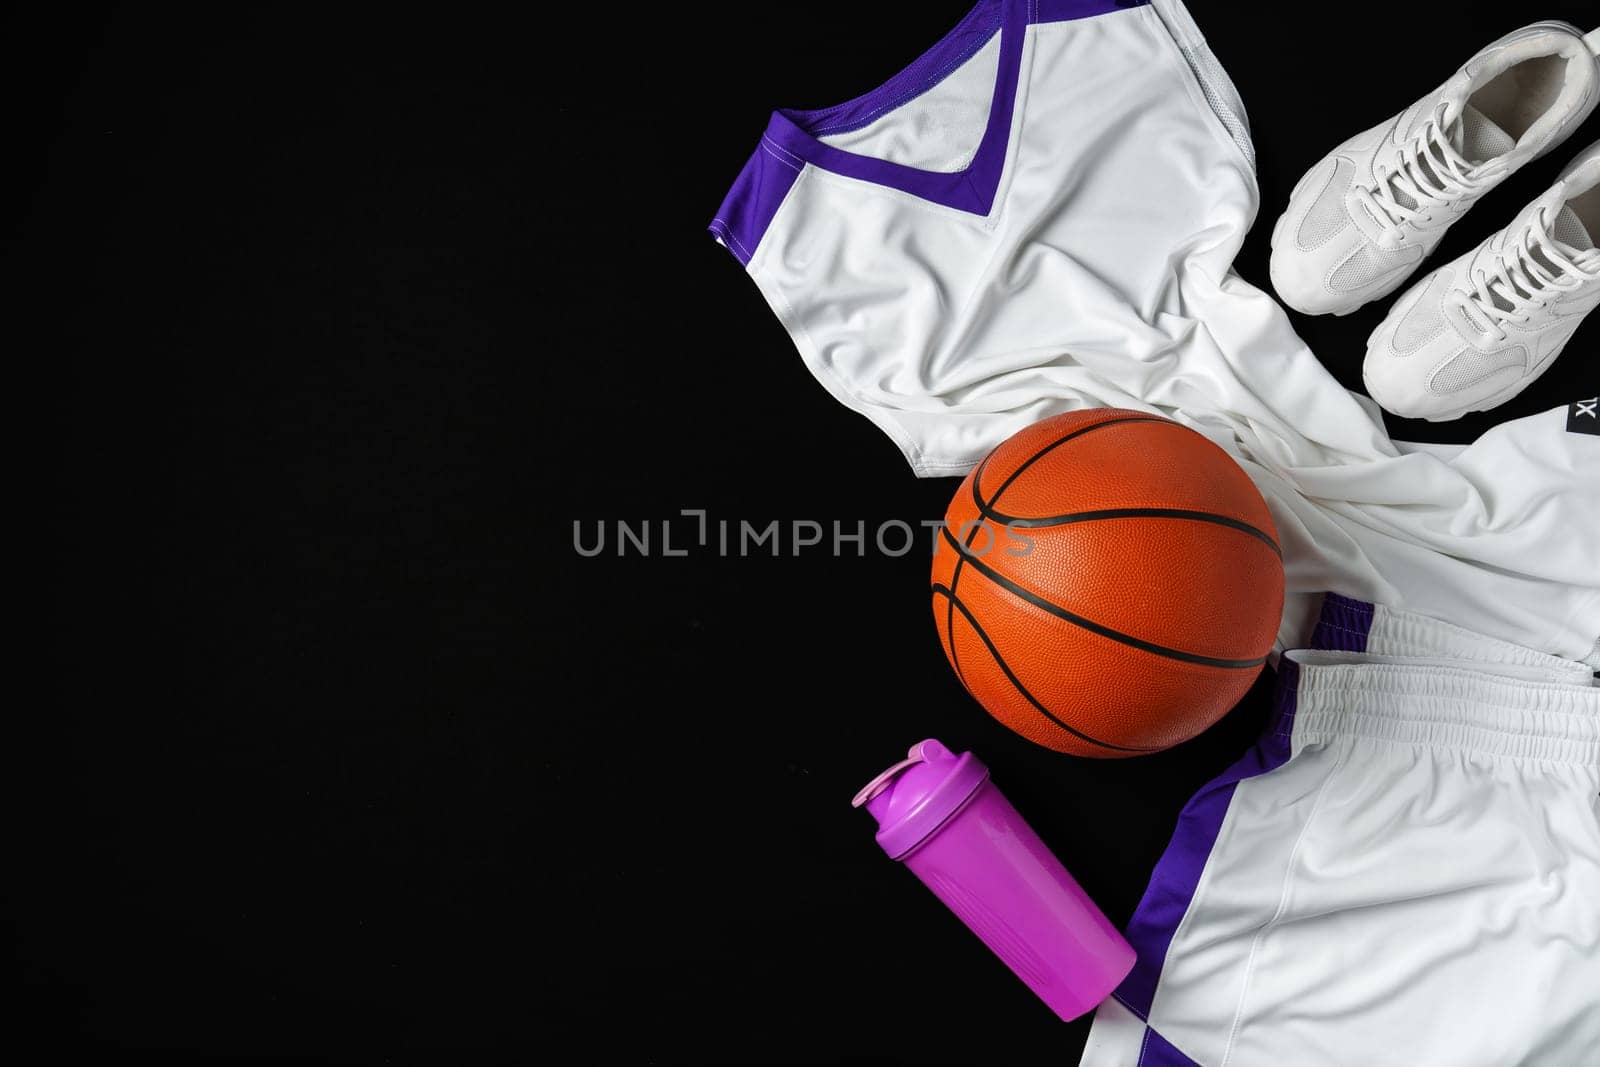 Basketball Gear Prepared for an Evening Training Session on a Dark Backdrop by Fabrikasimf